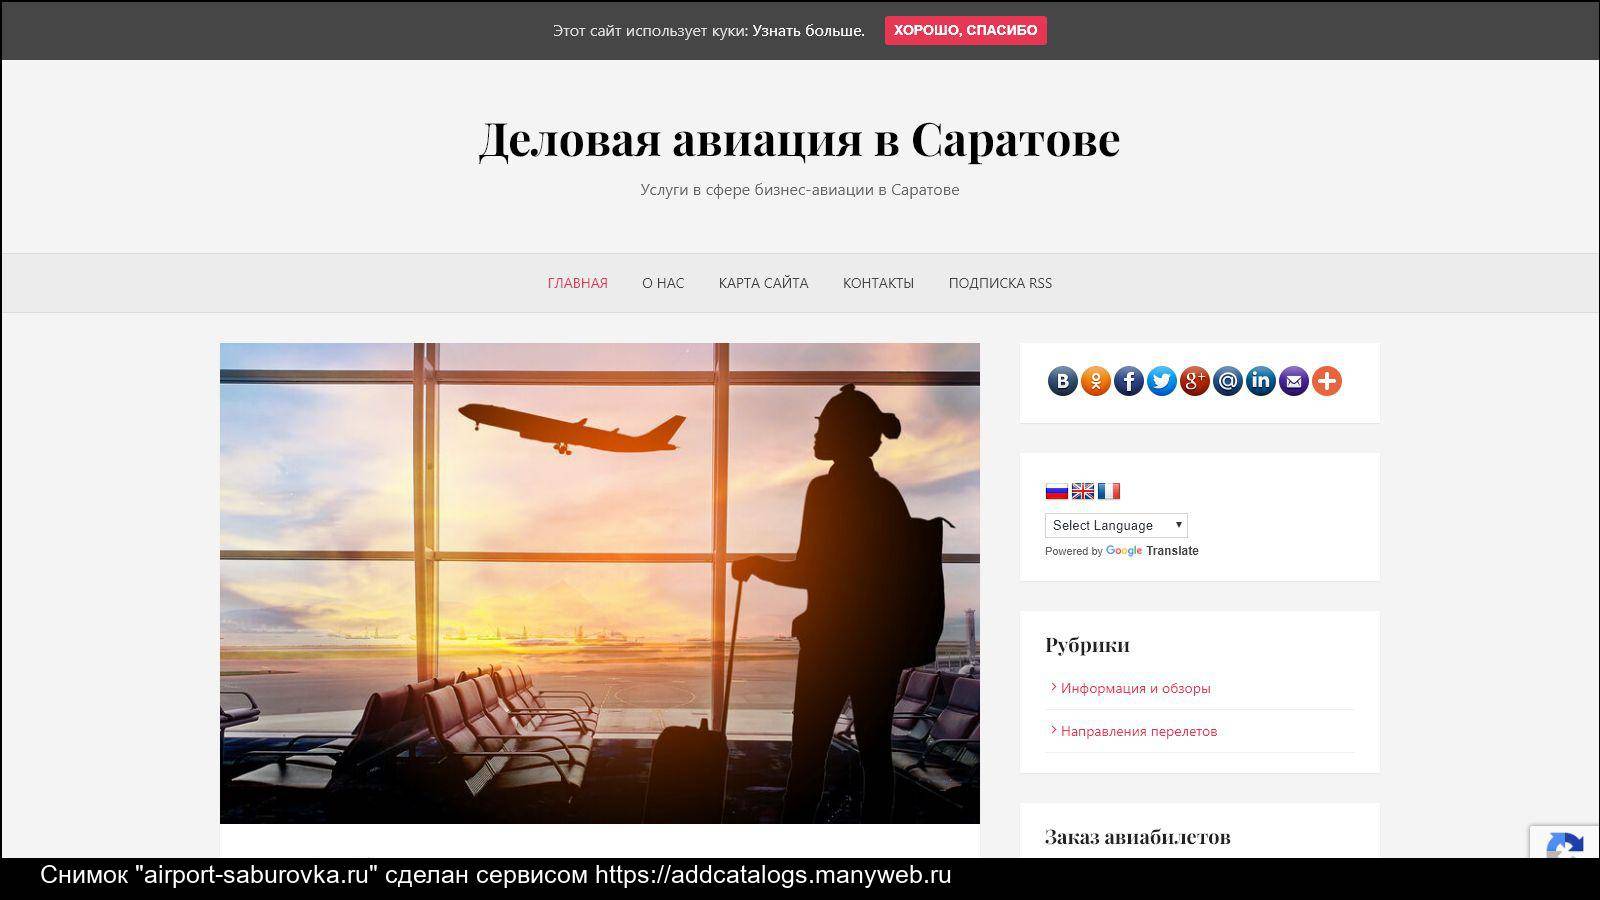 Все об аэропорте саратова (rtw uwss) – онлайн табло вылета и прилета